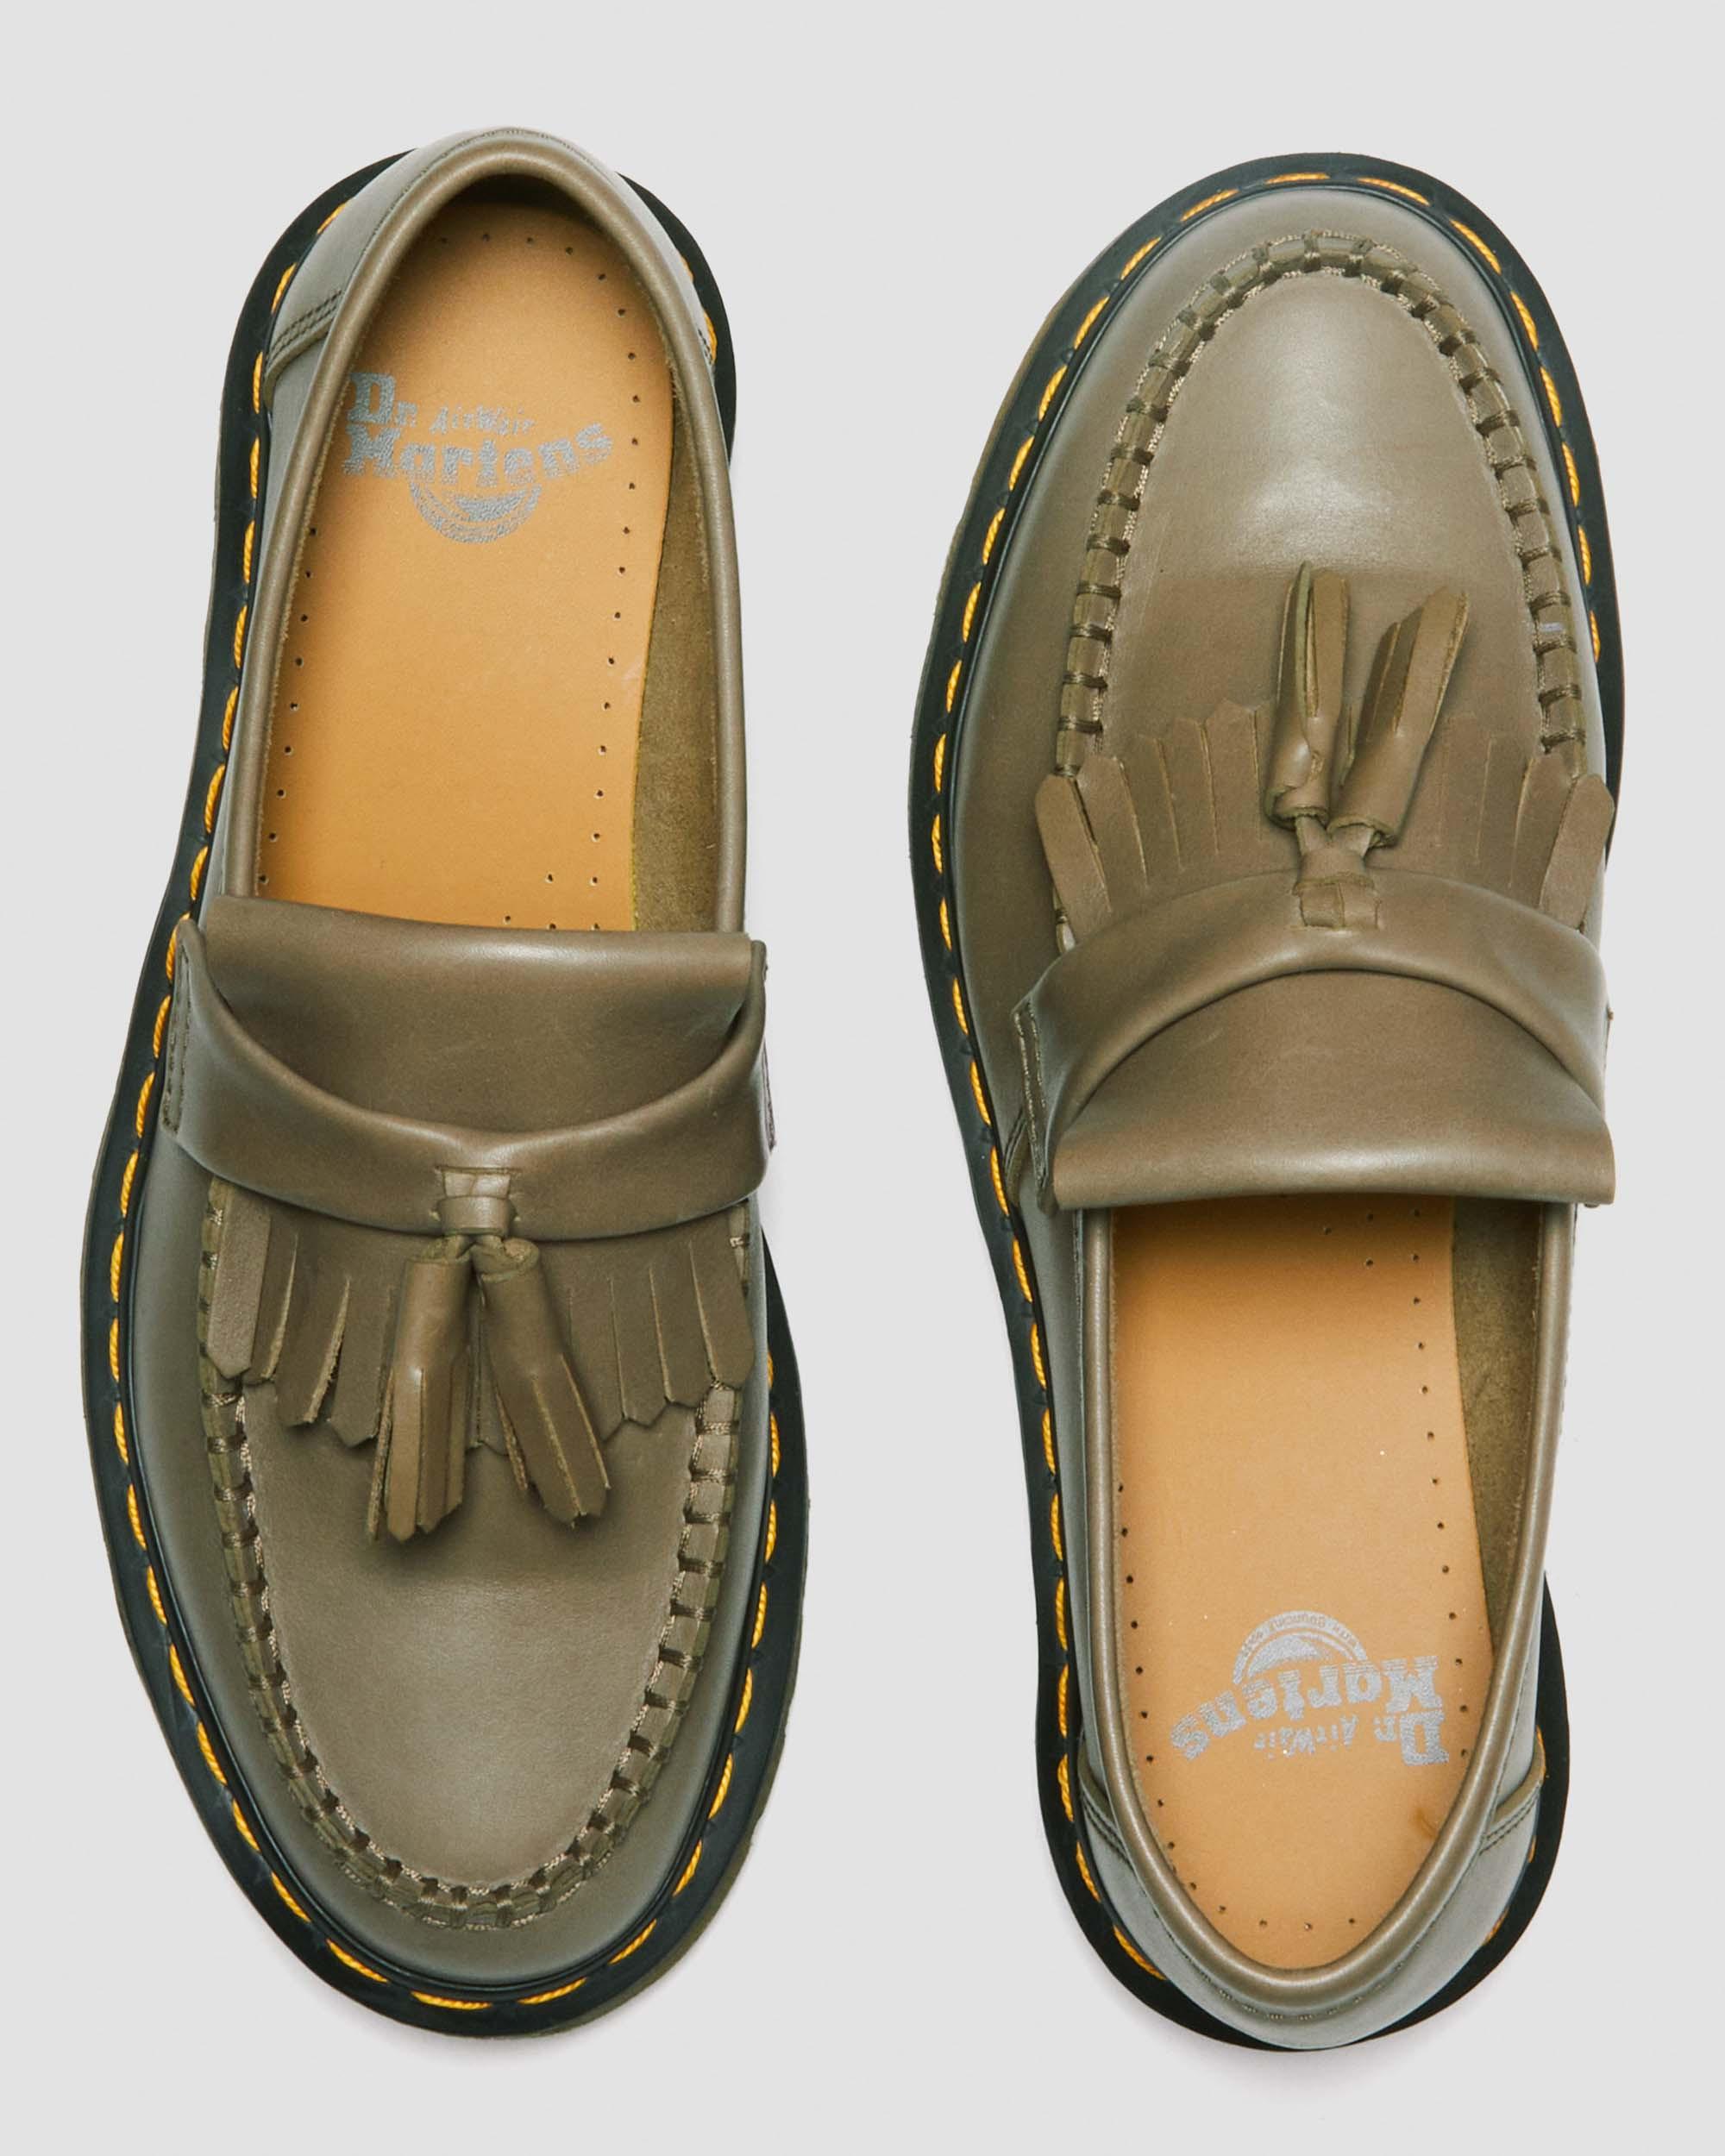 Adrian Yellow Stitch Carrara Leather Shoes